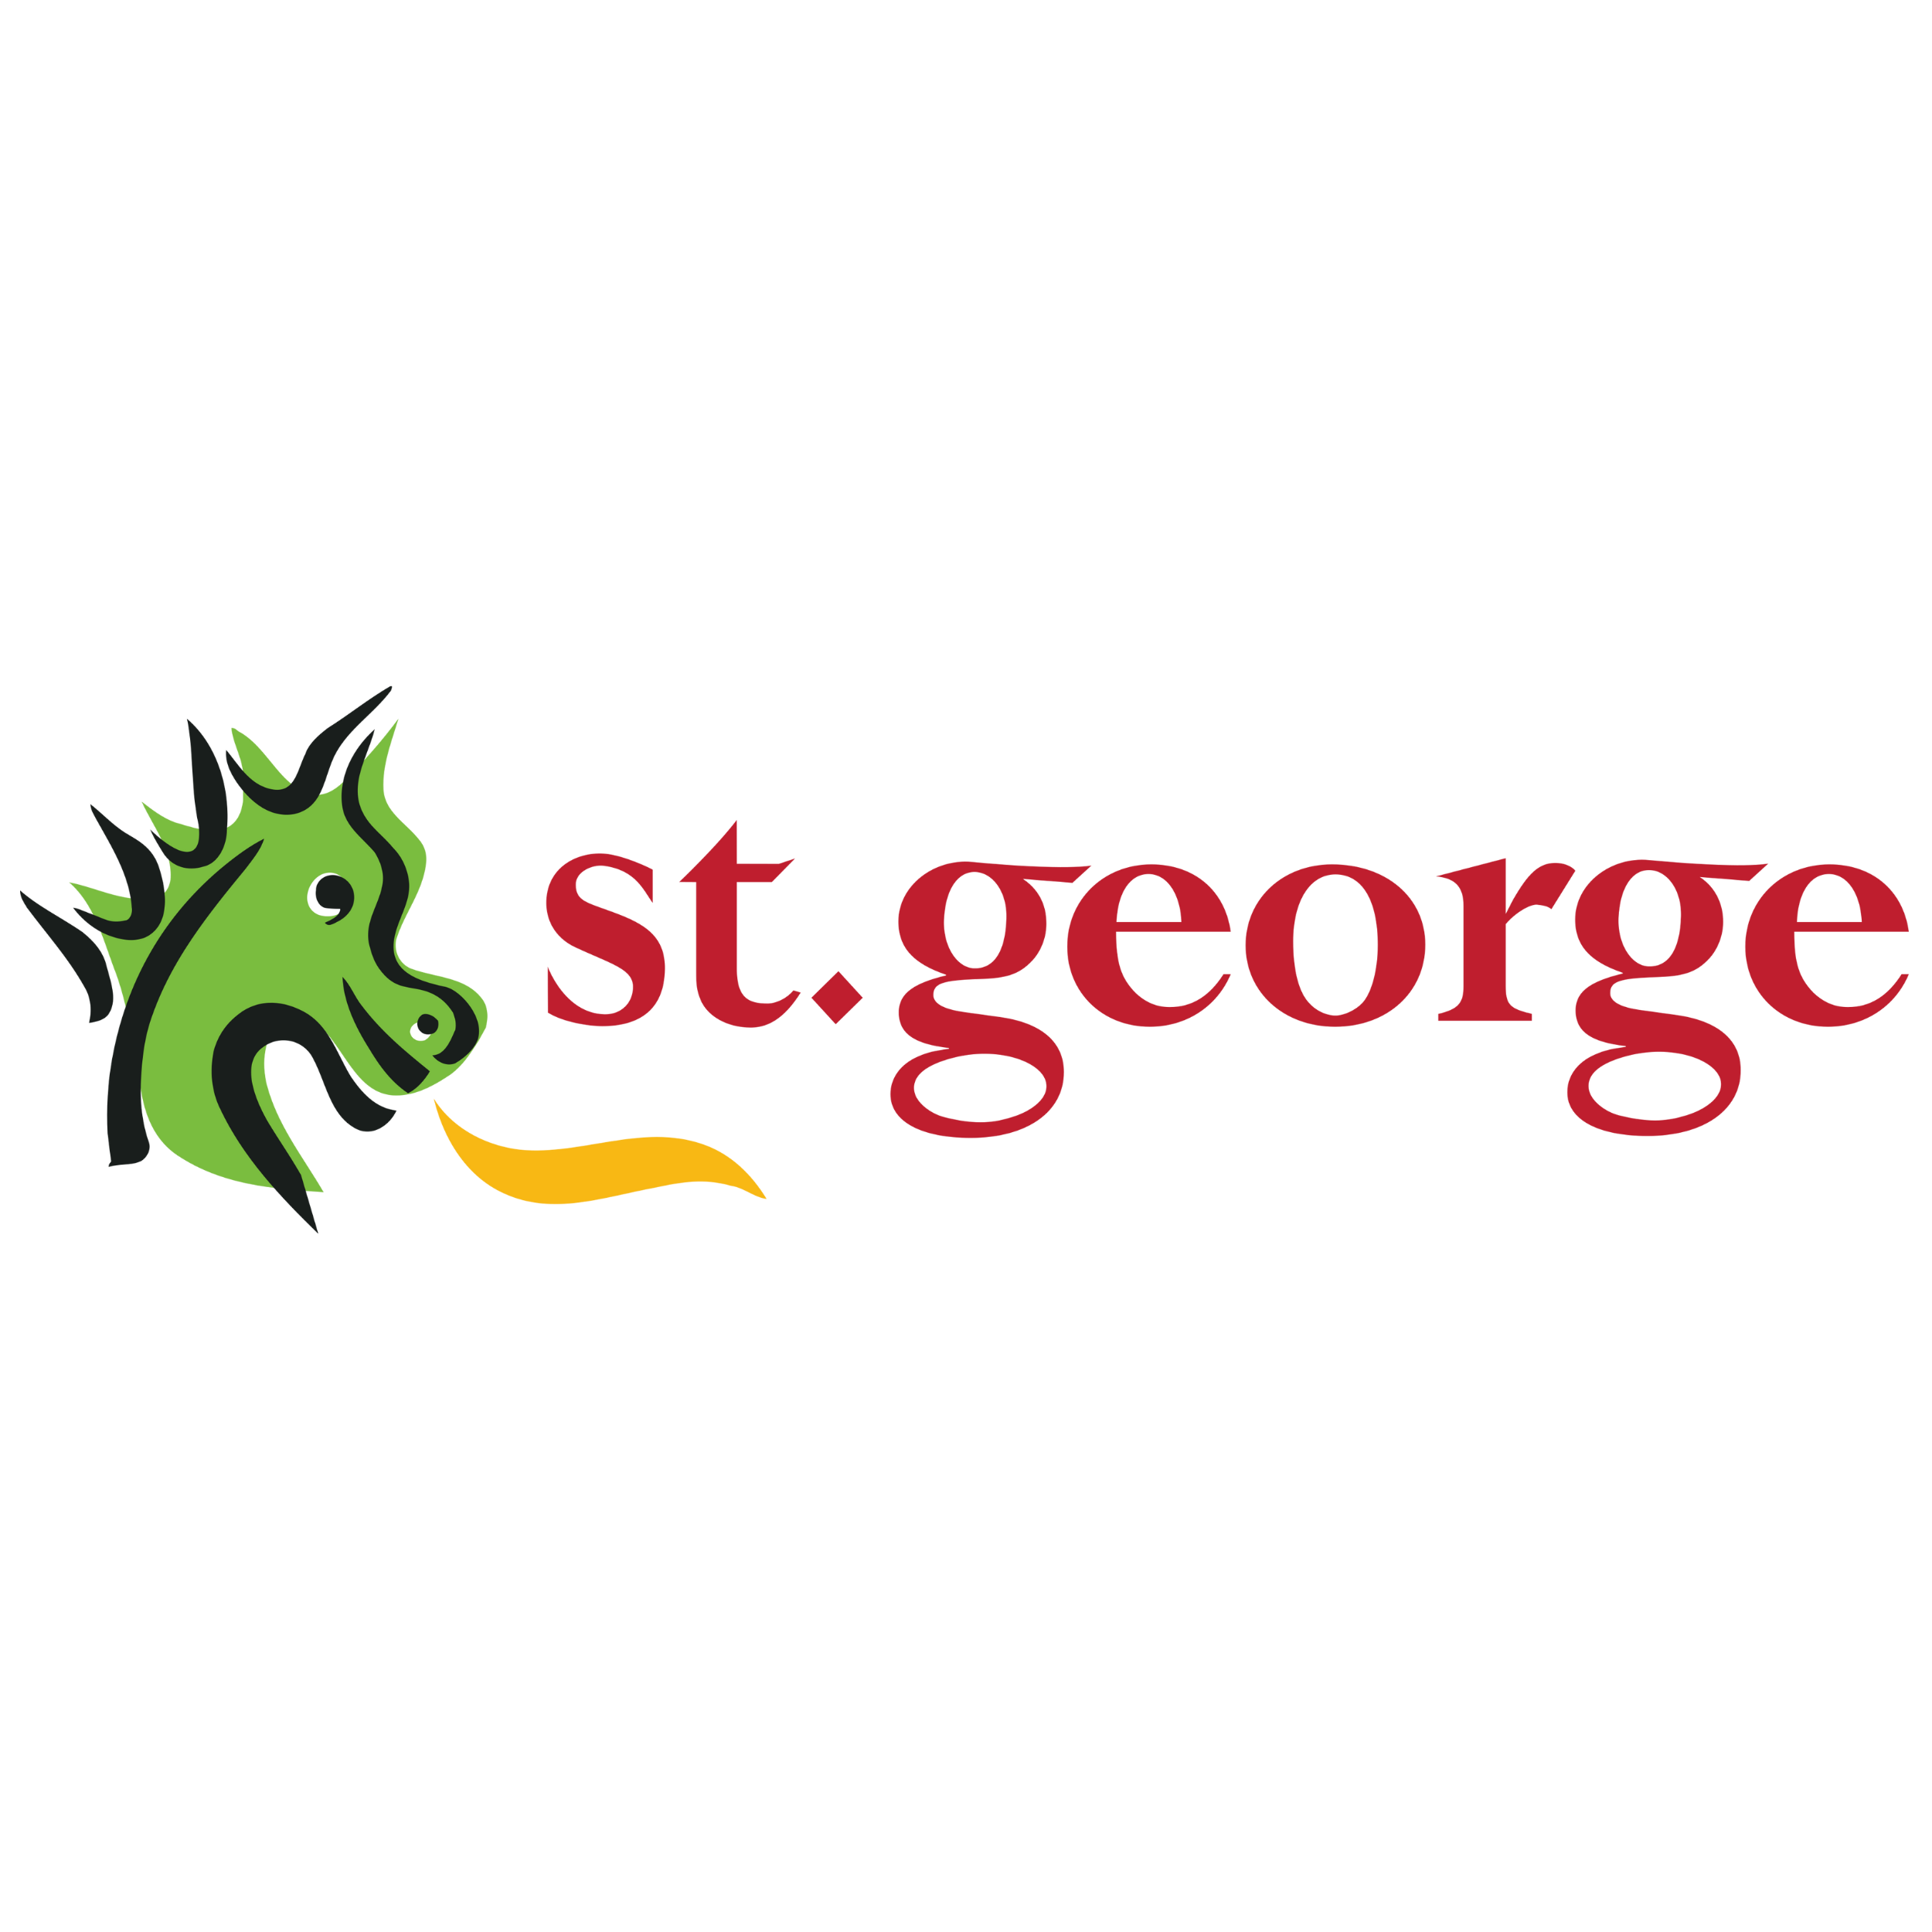 St. George : Brand Short Description Type Here.